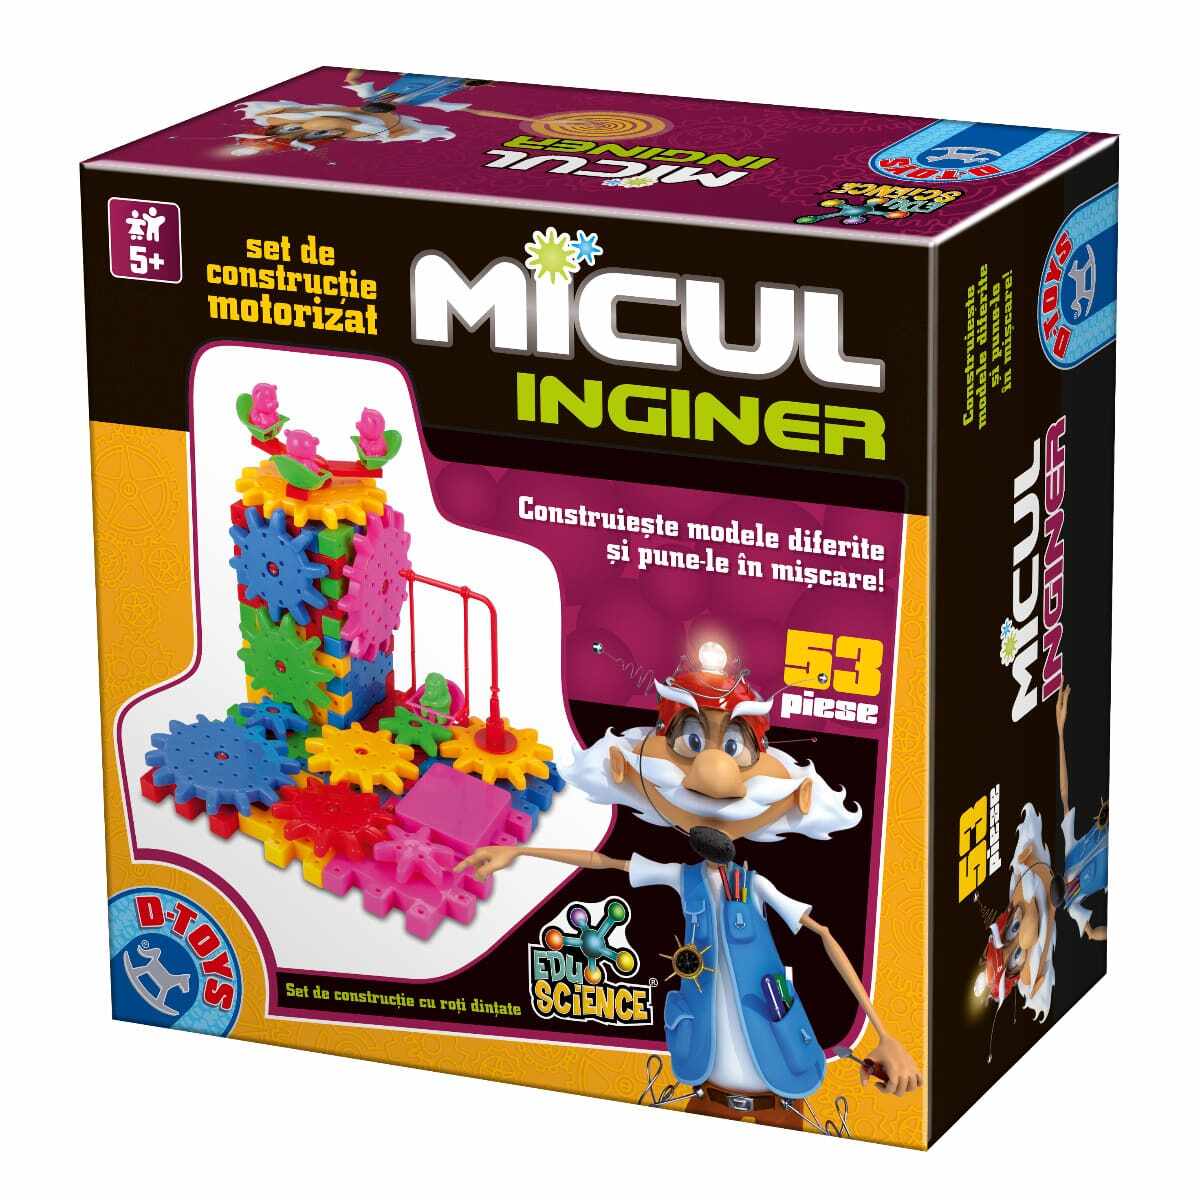 Micul Inginer - 53 piese - Set de construcție motorizat - Joc EduScience